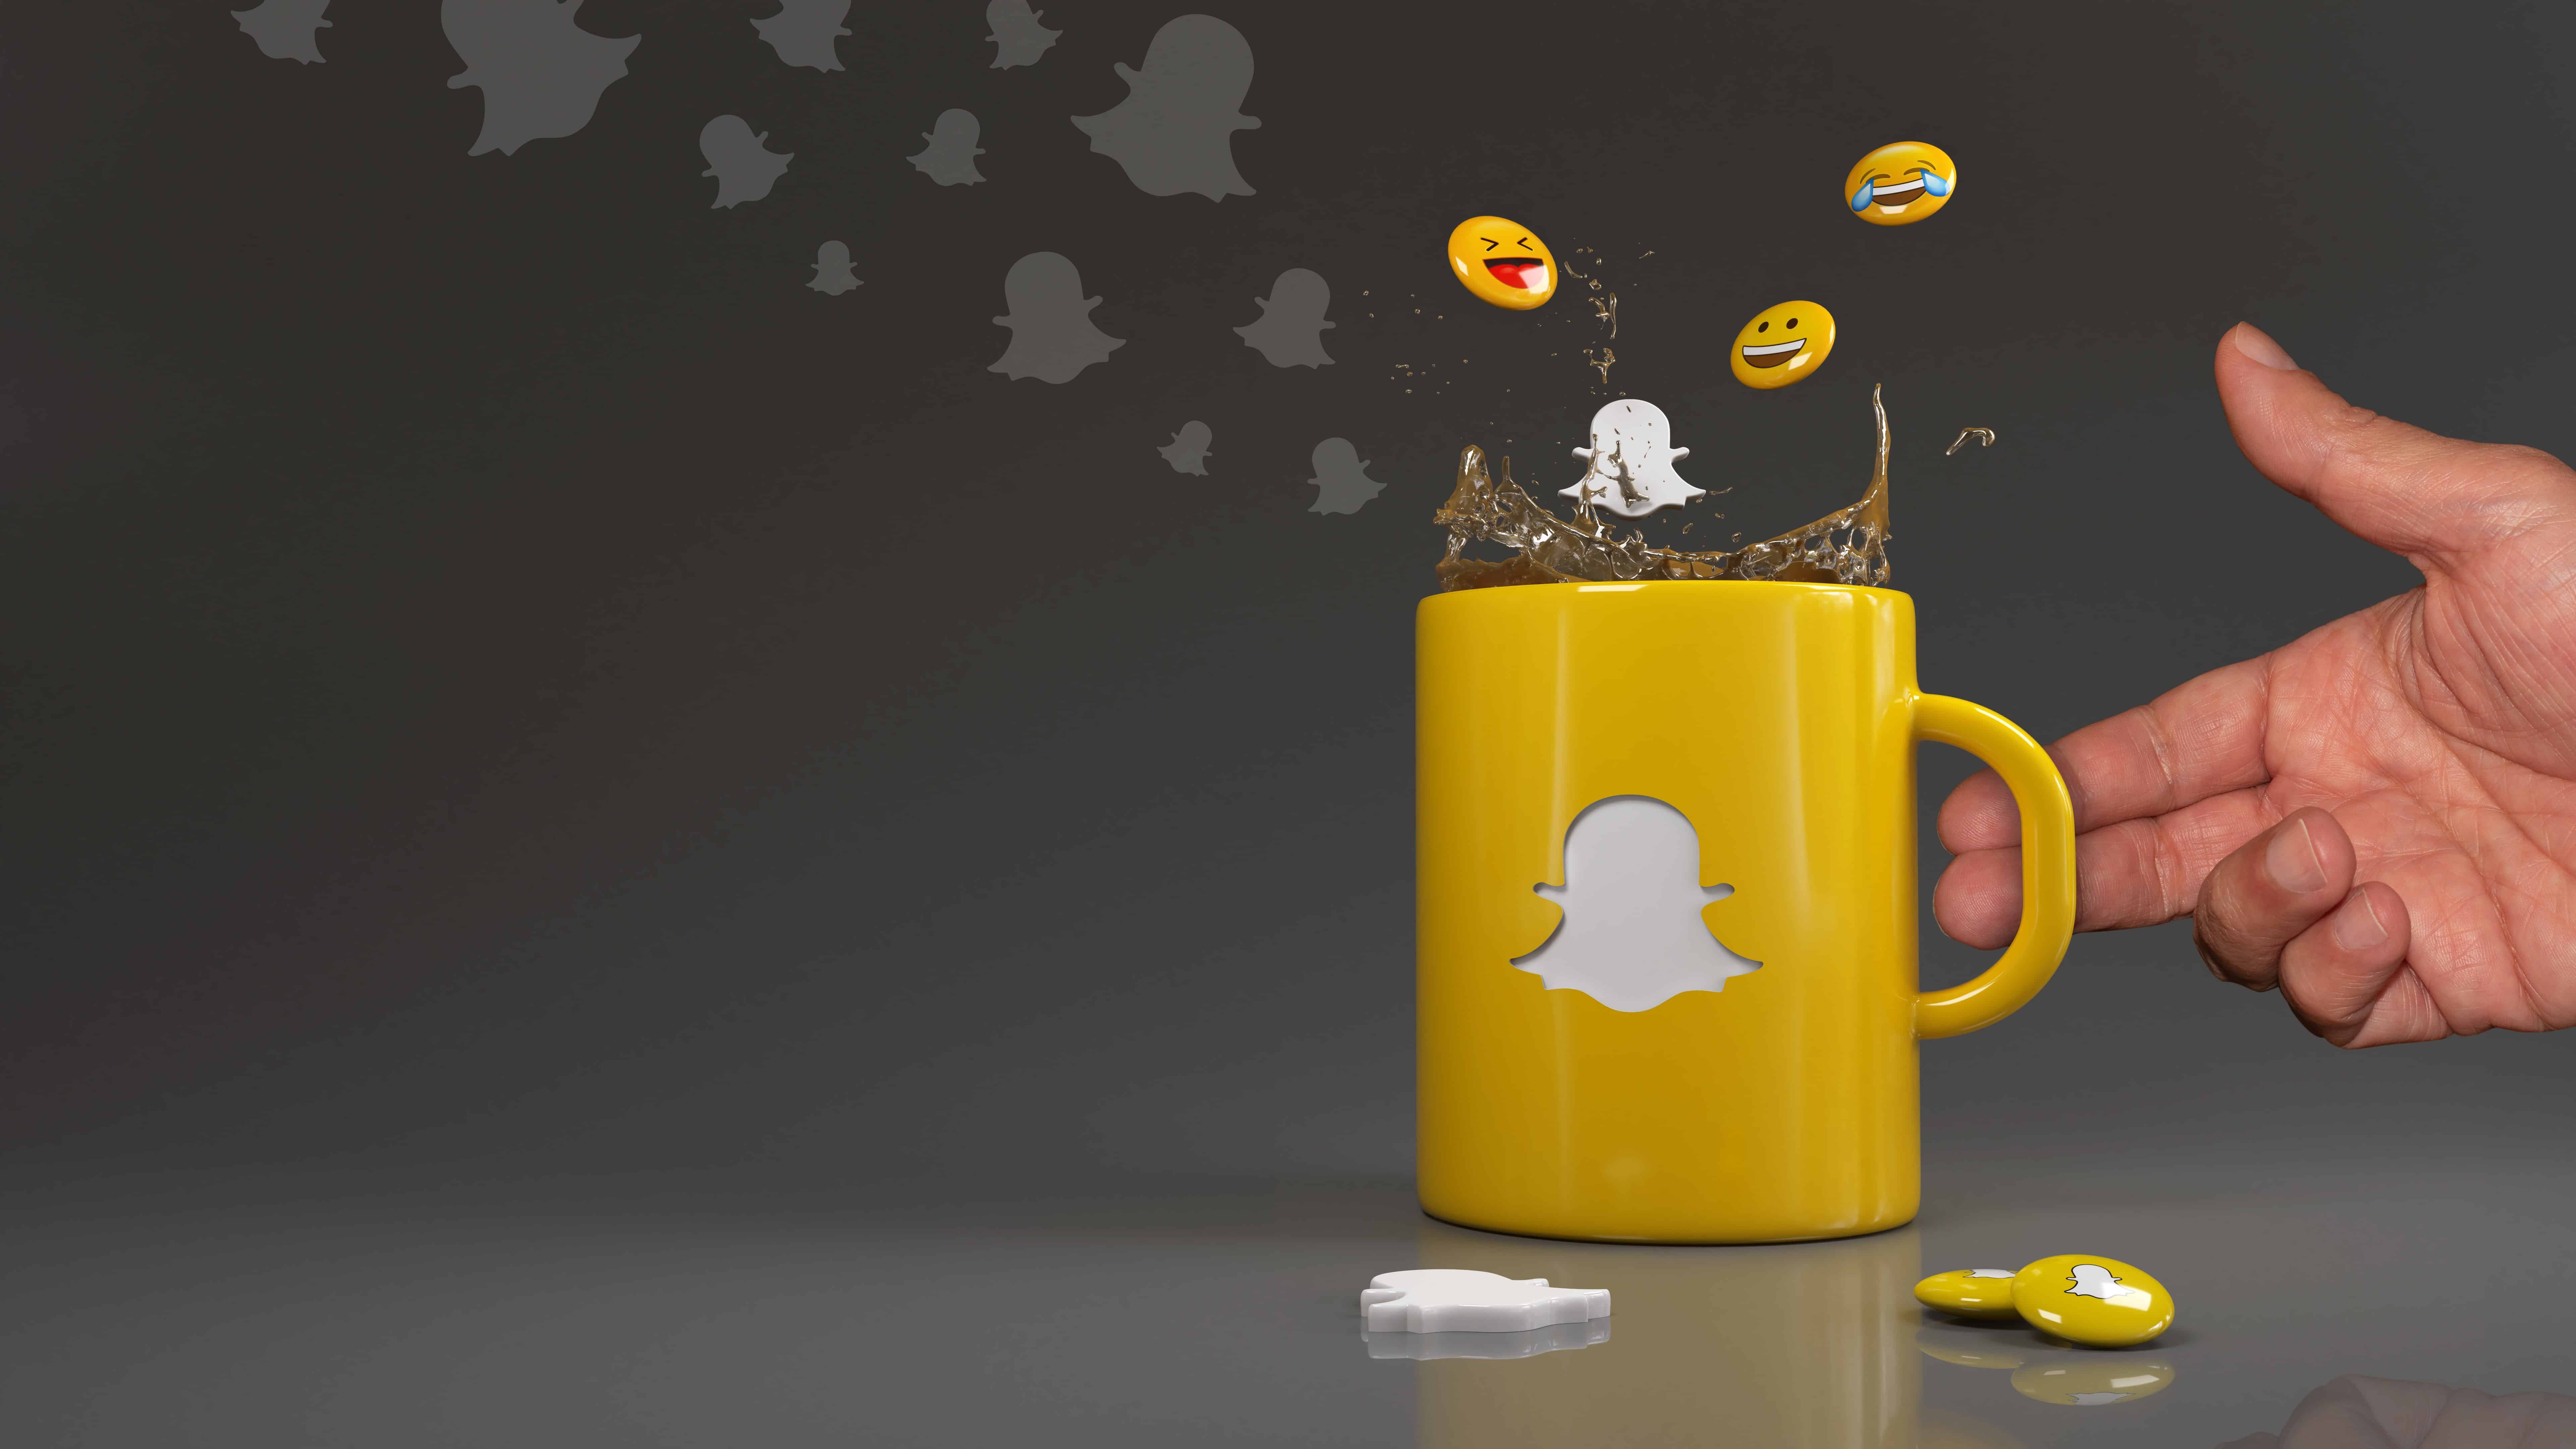 emojis falling into a yellow mug with the Snapchat logo